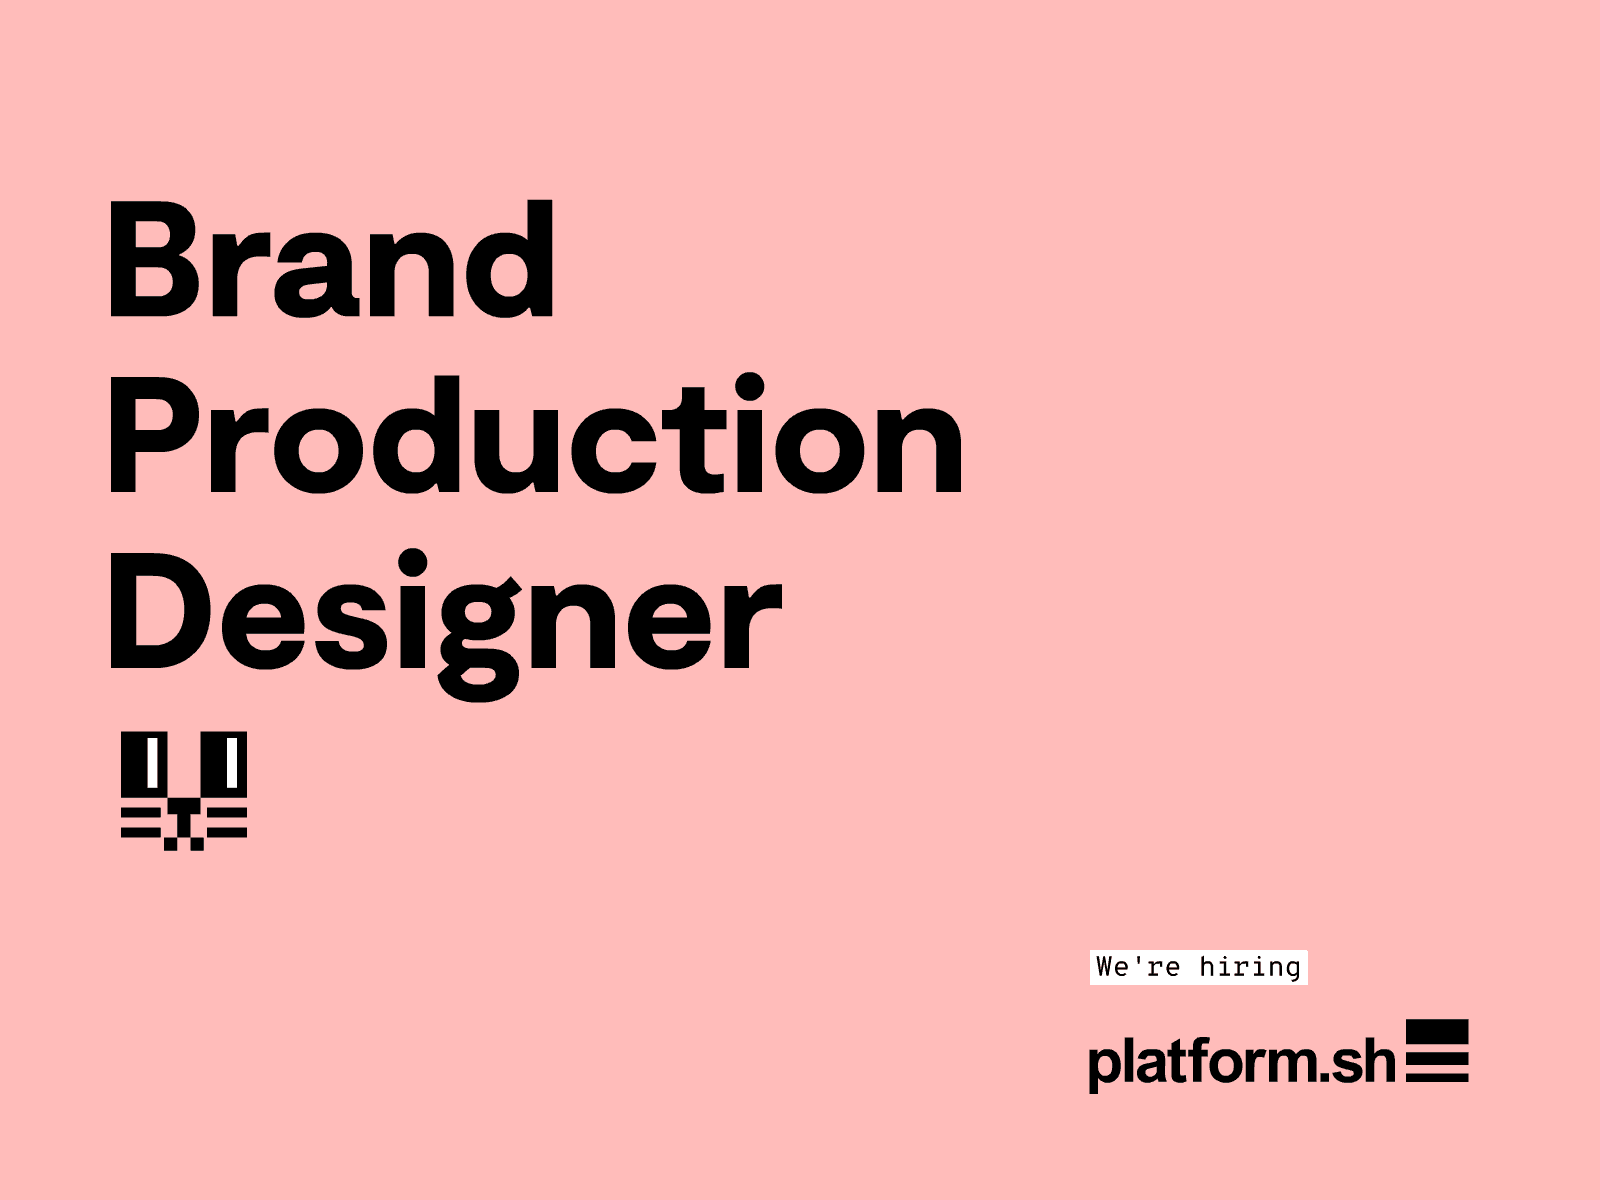 Brand Production Designer